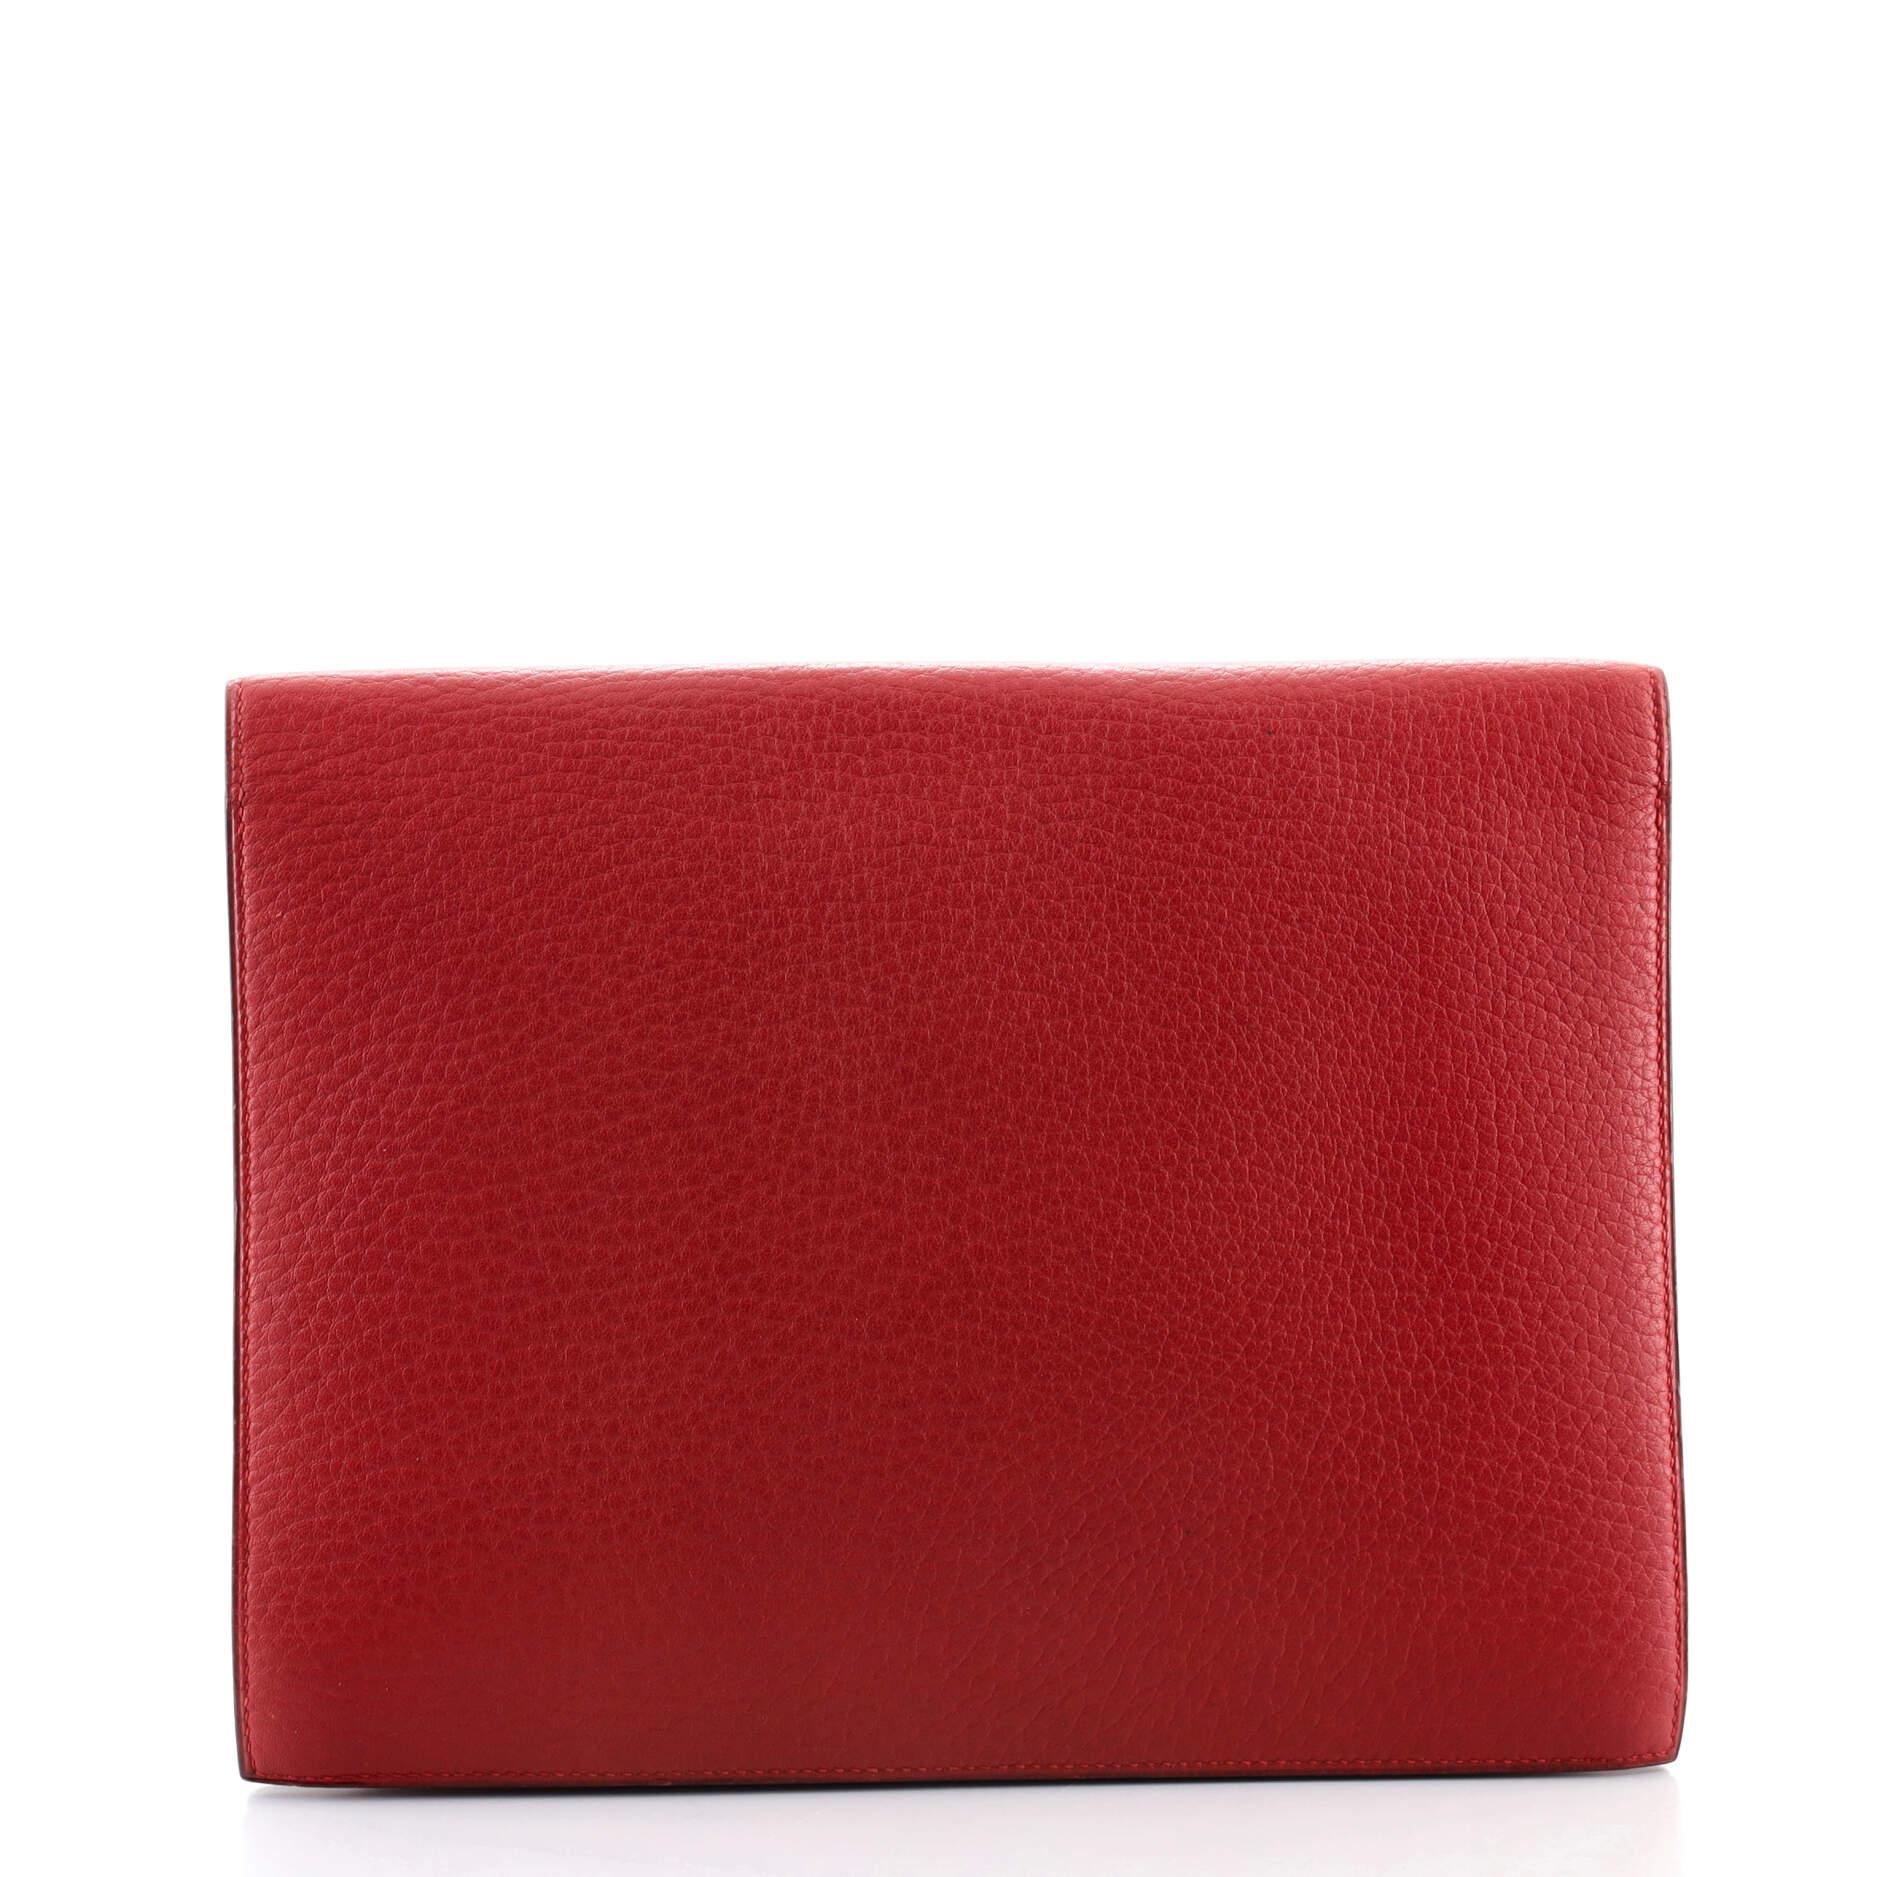 Red Hermes Vintage 1938 Clutch Leather